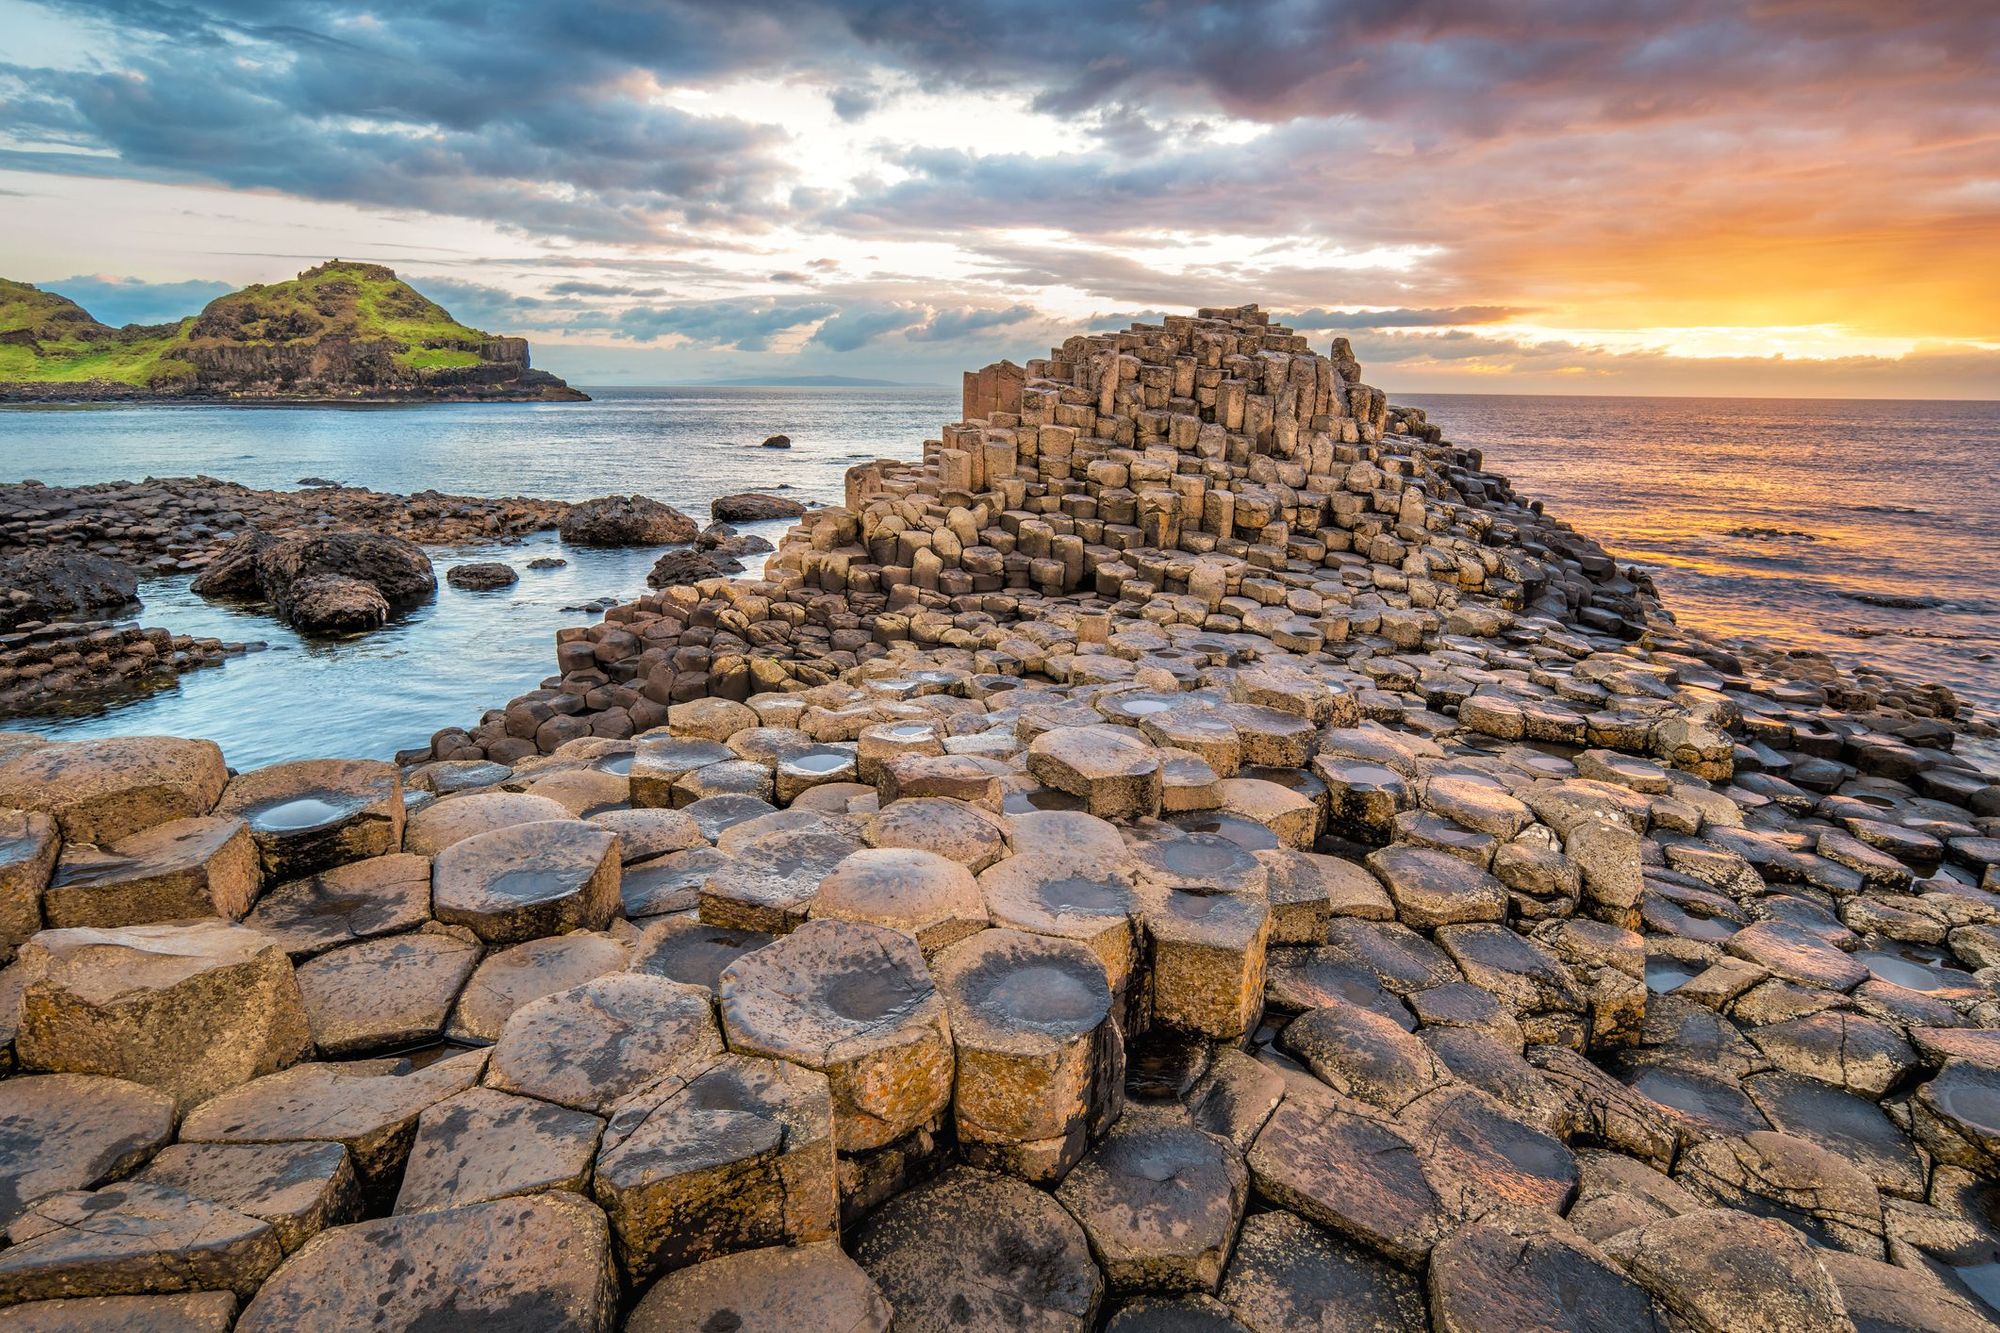 The striking basalt columns of Giant's Causeway, in Northern Ireland.